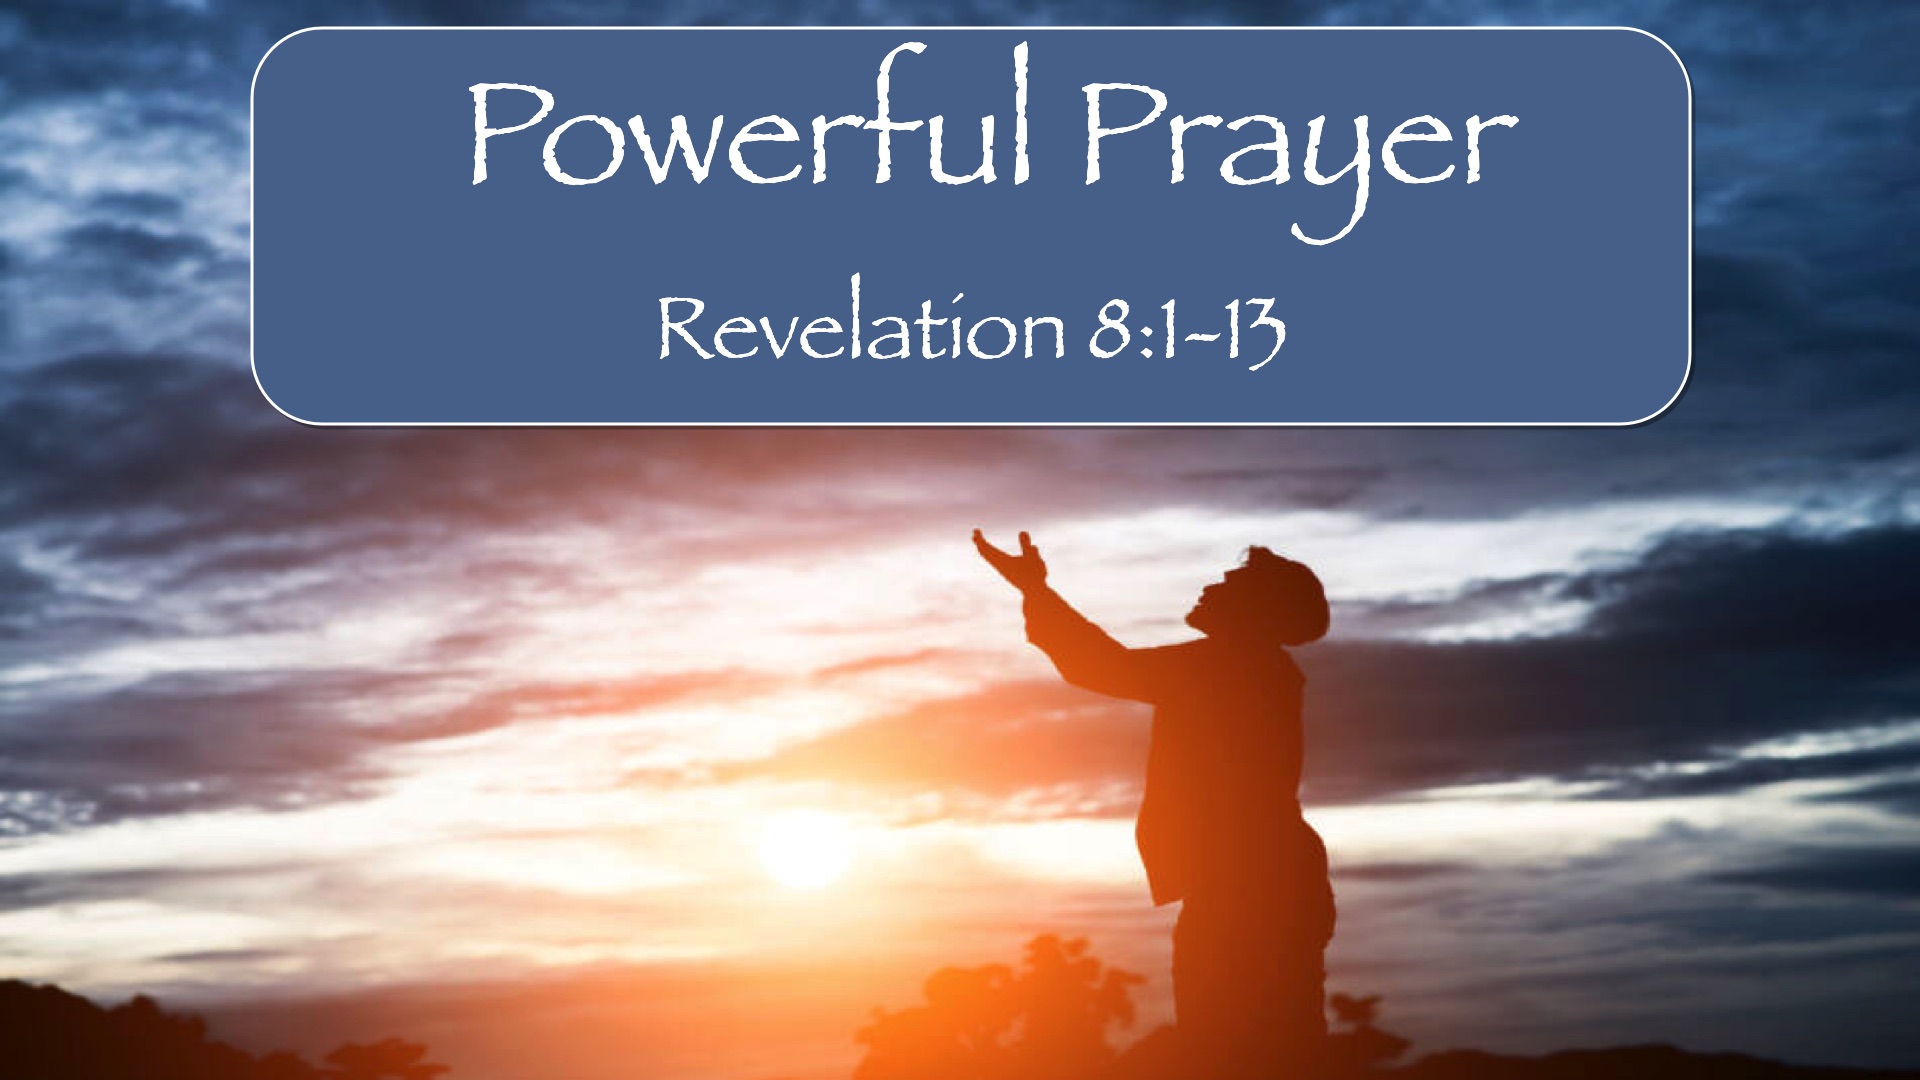 “The Book of Revelation: Powerful Prayer”